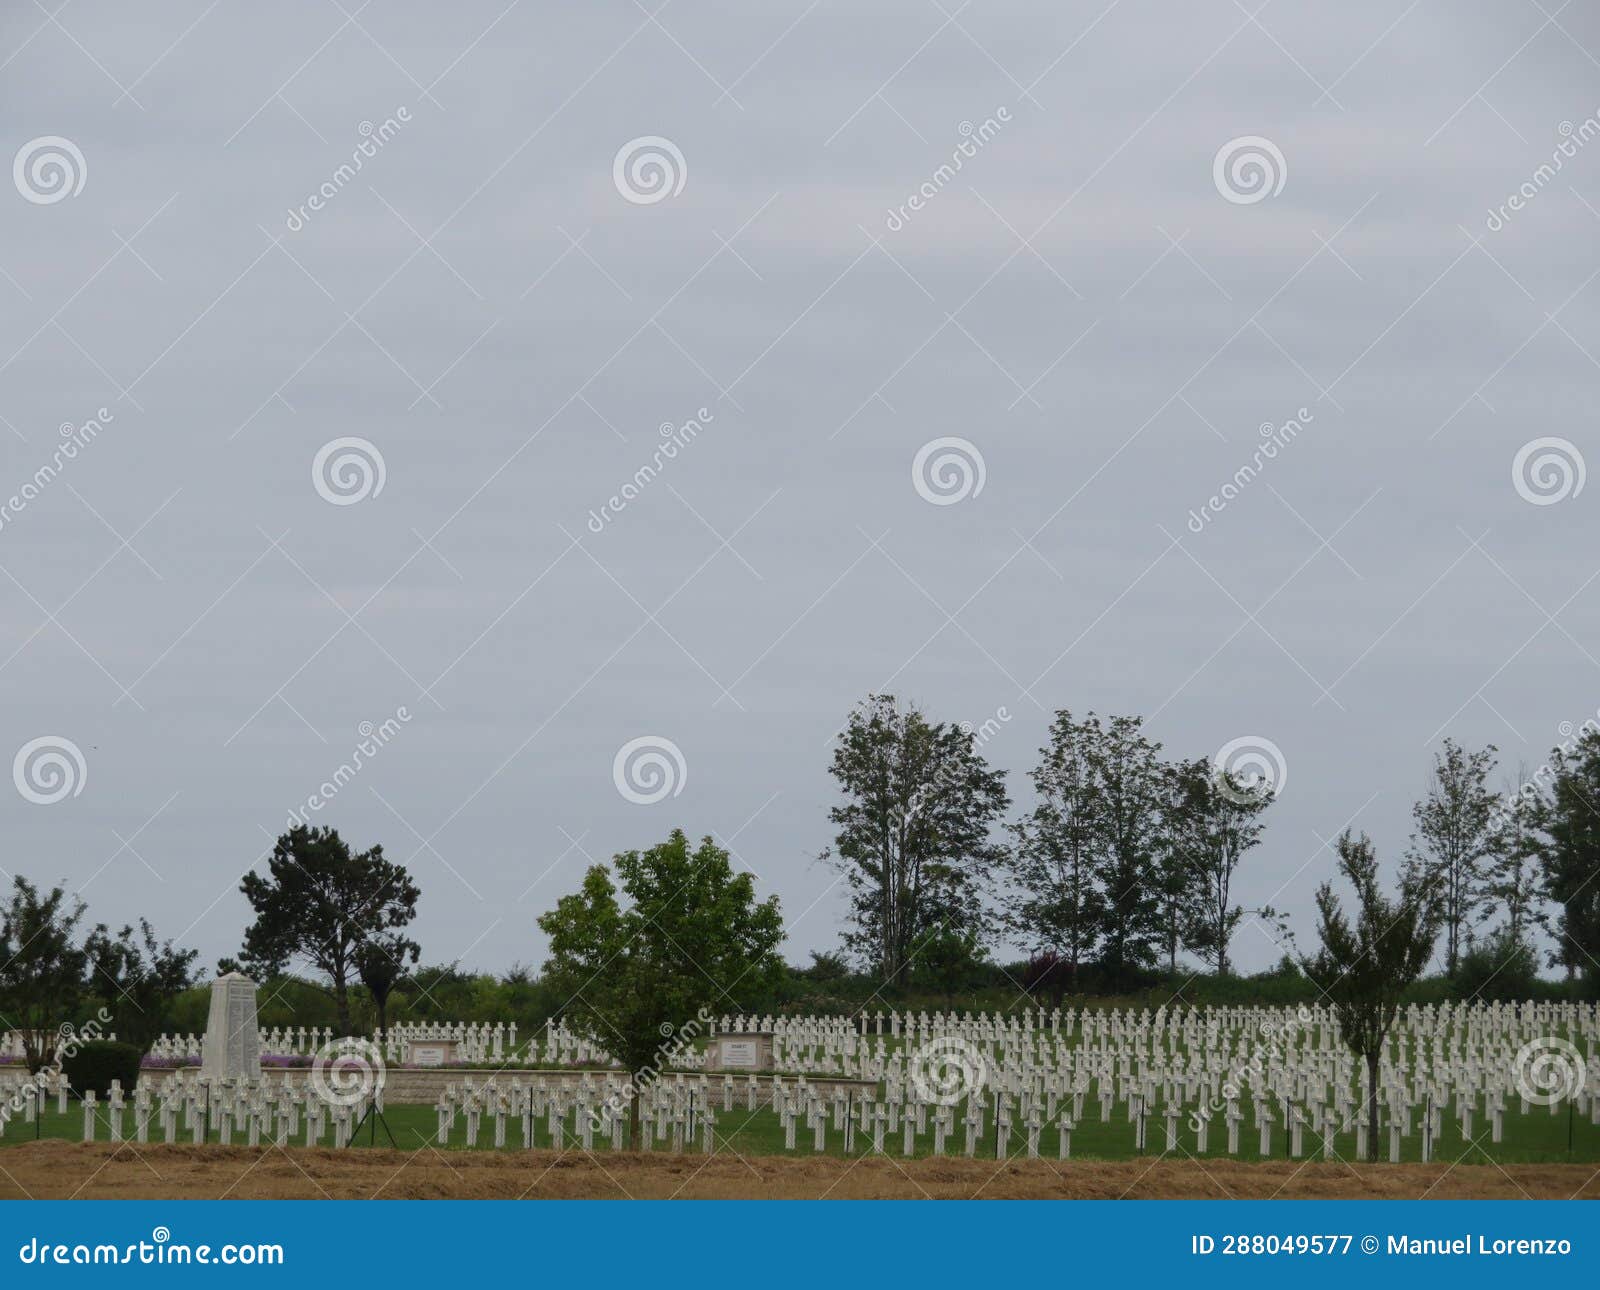 cemetery full of military crosses fallen in the war order